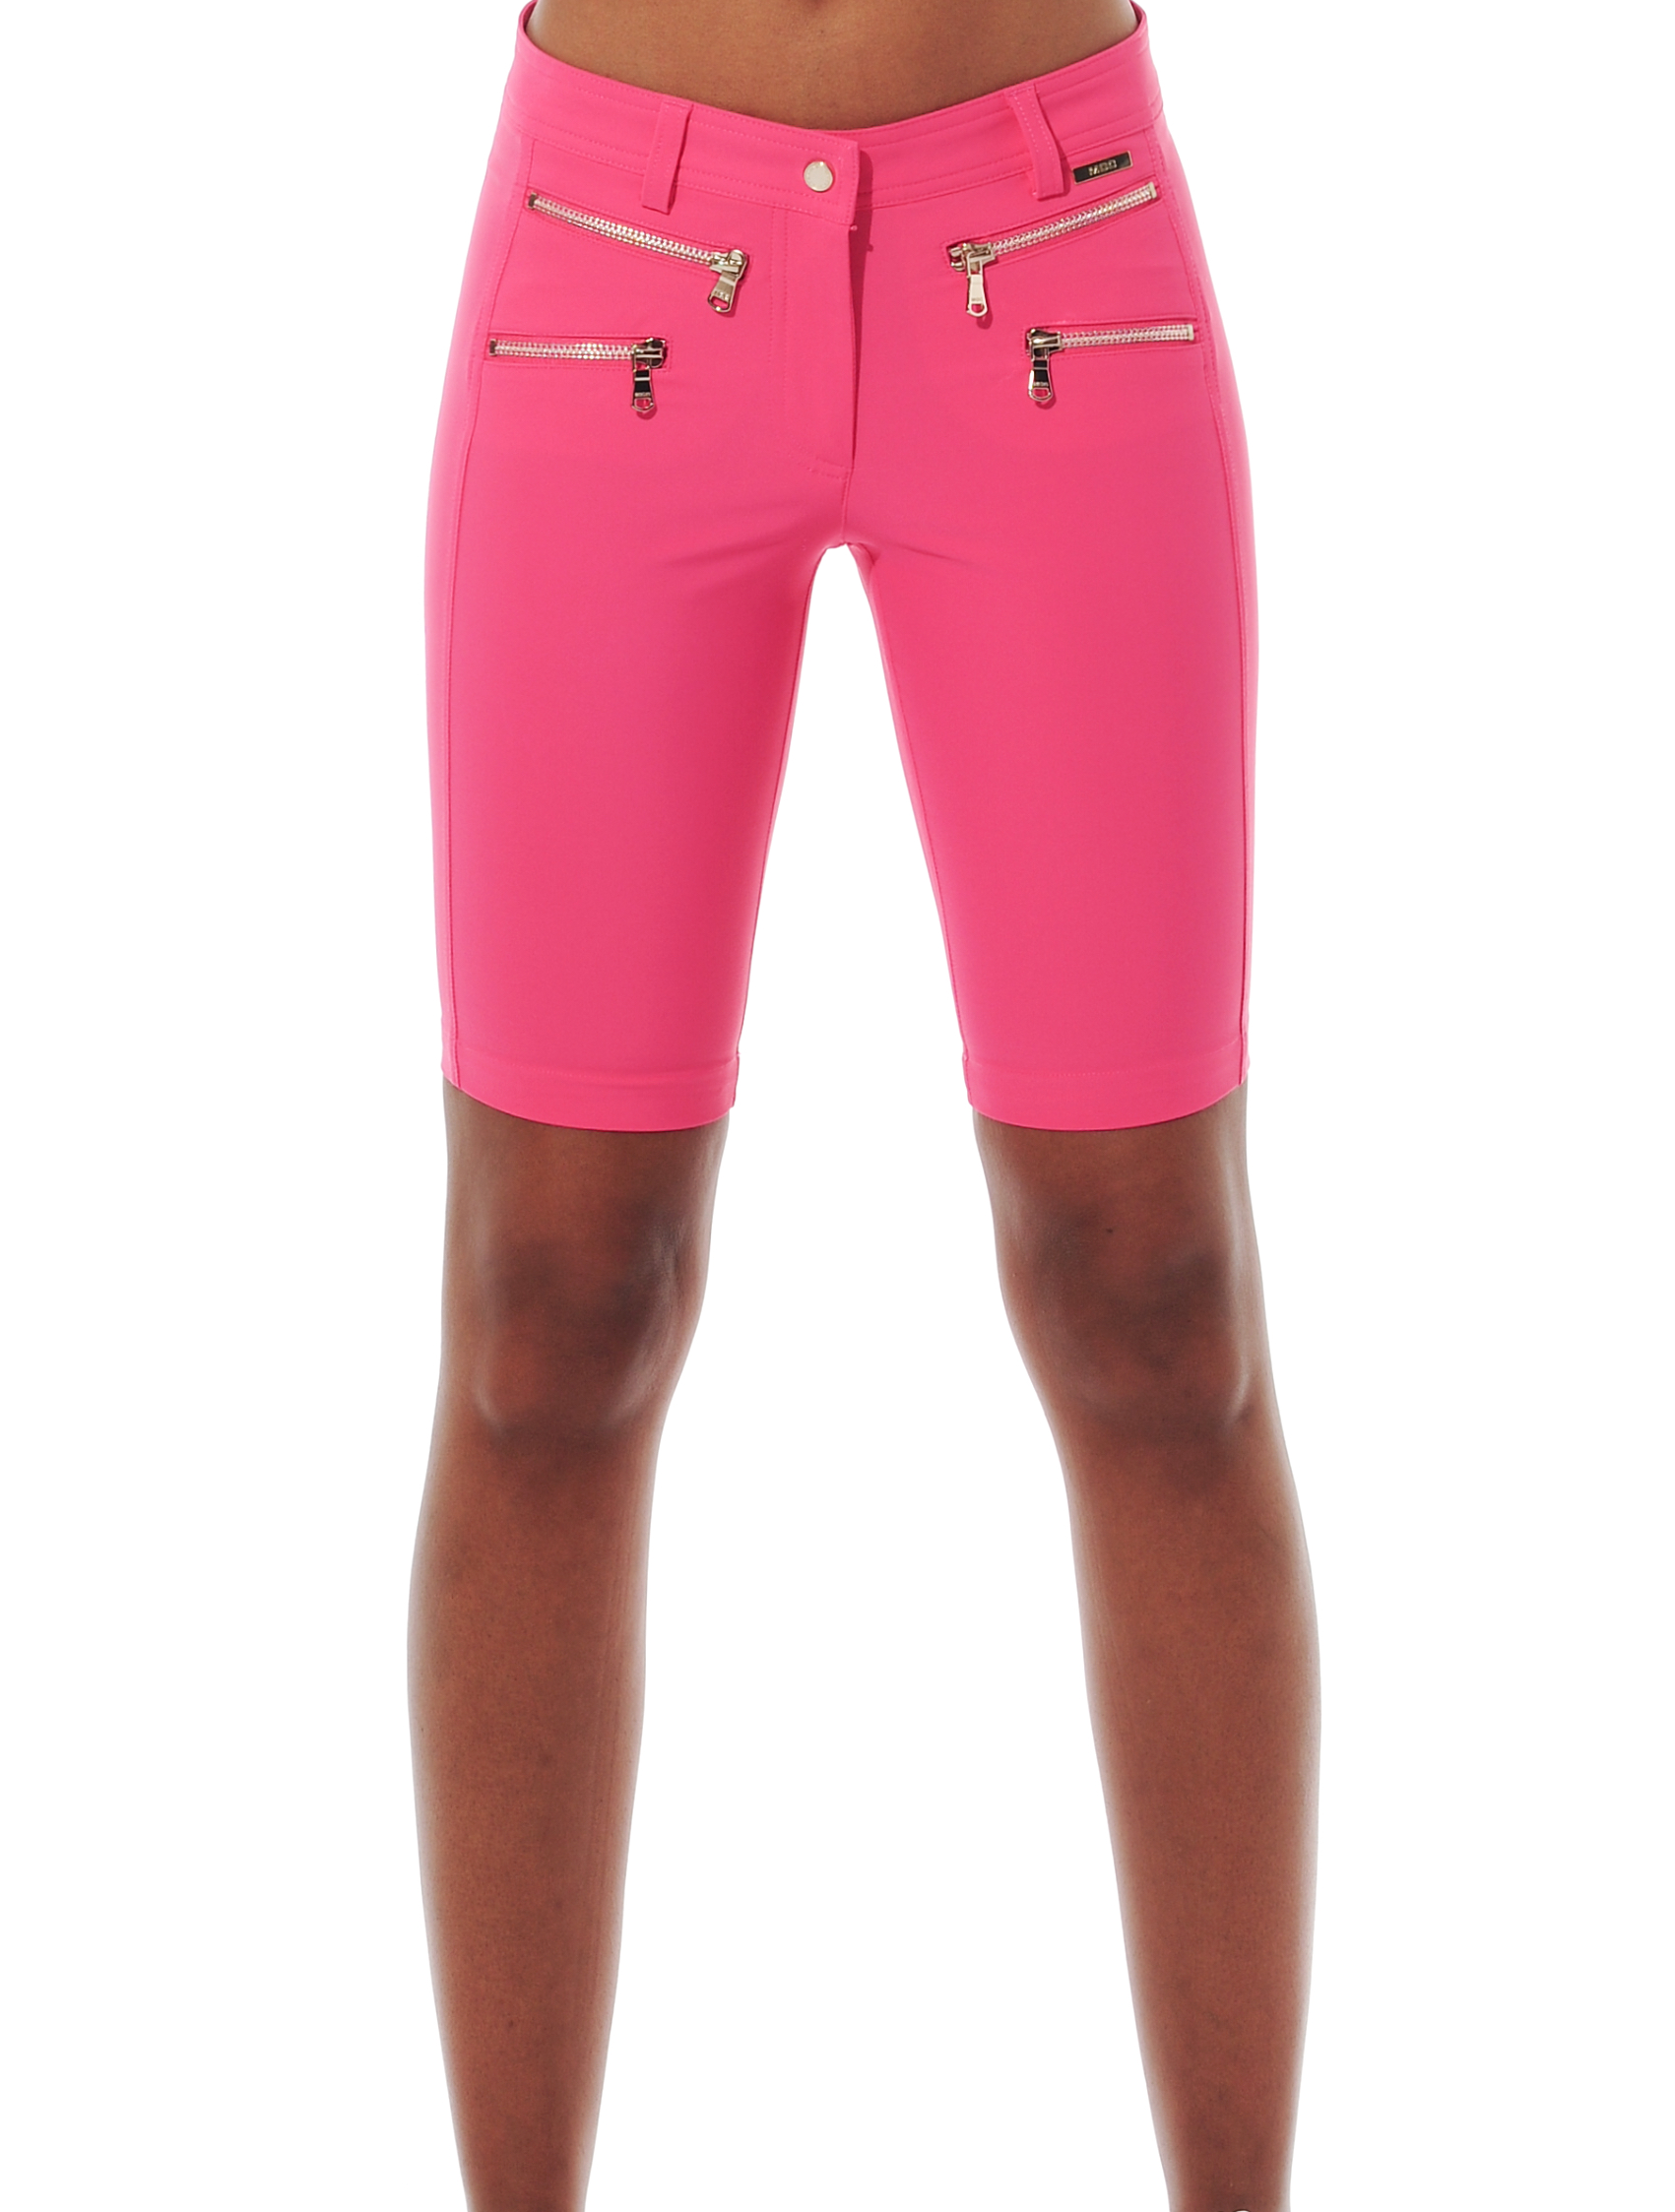 4way stretch double zip shorts flamingo 